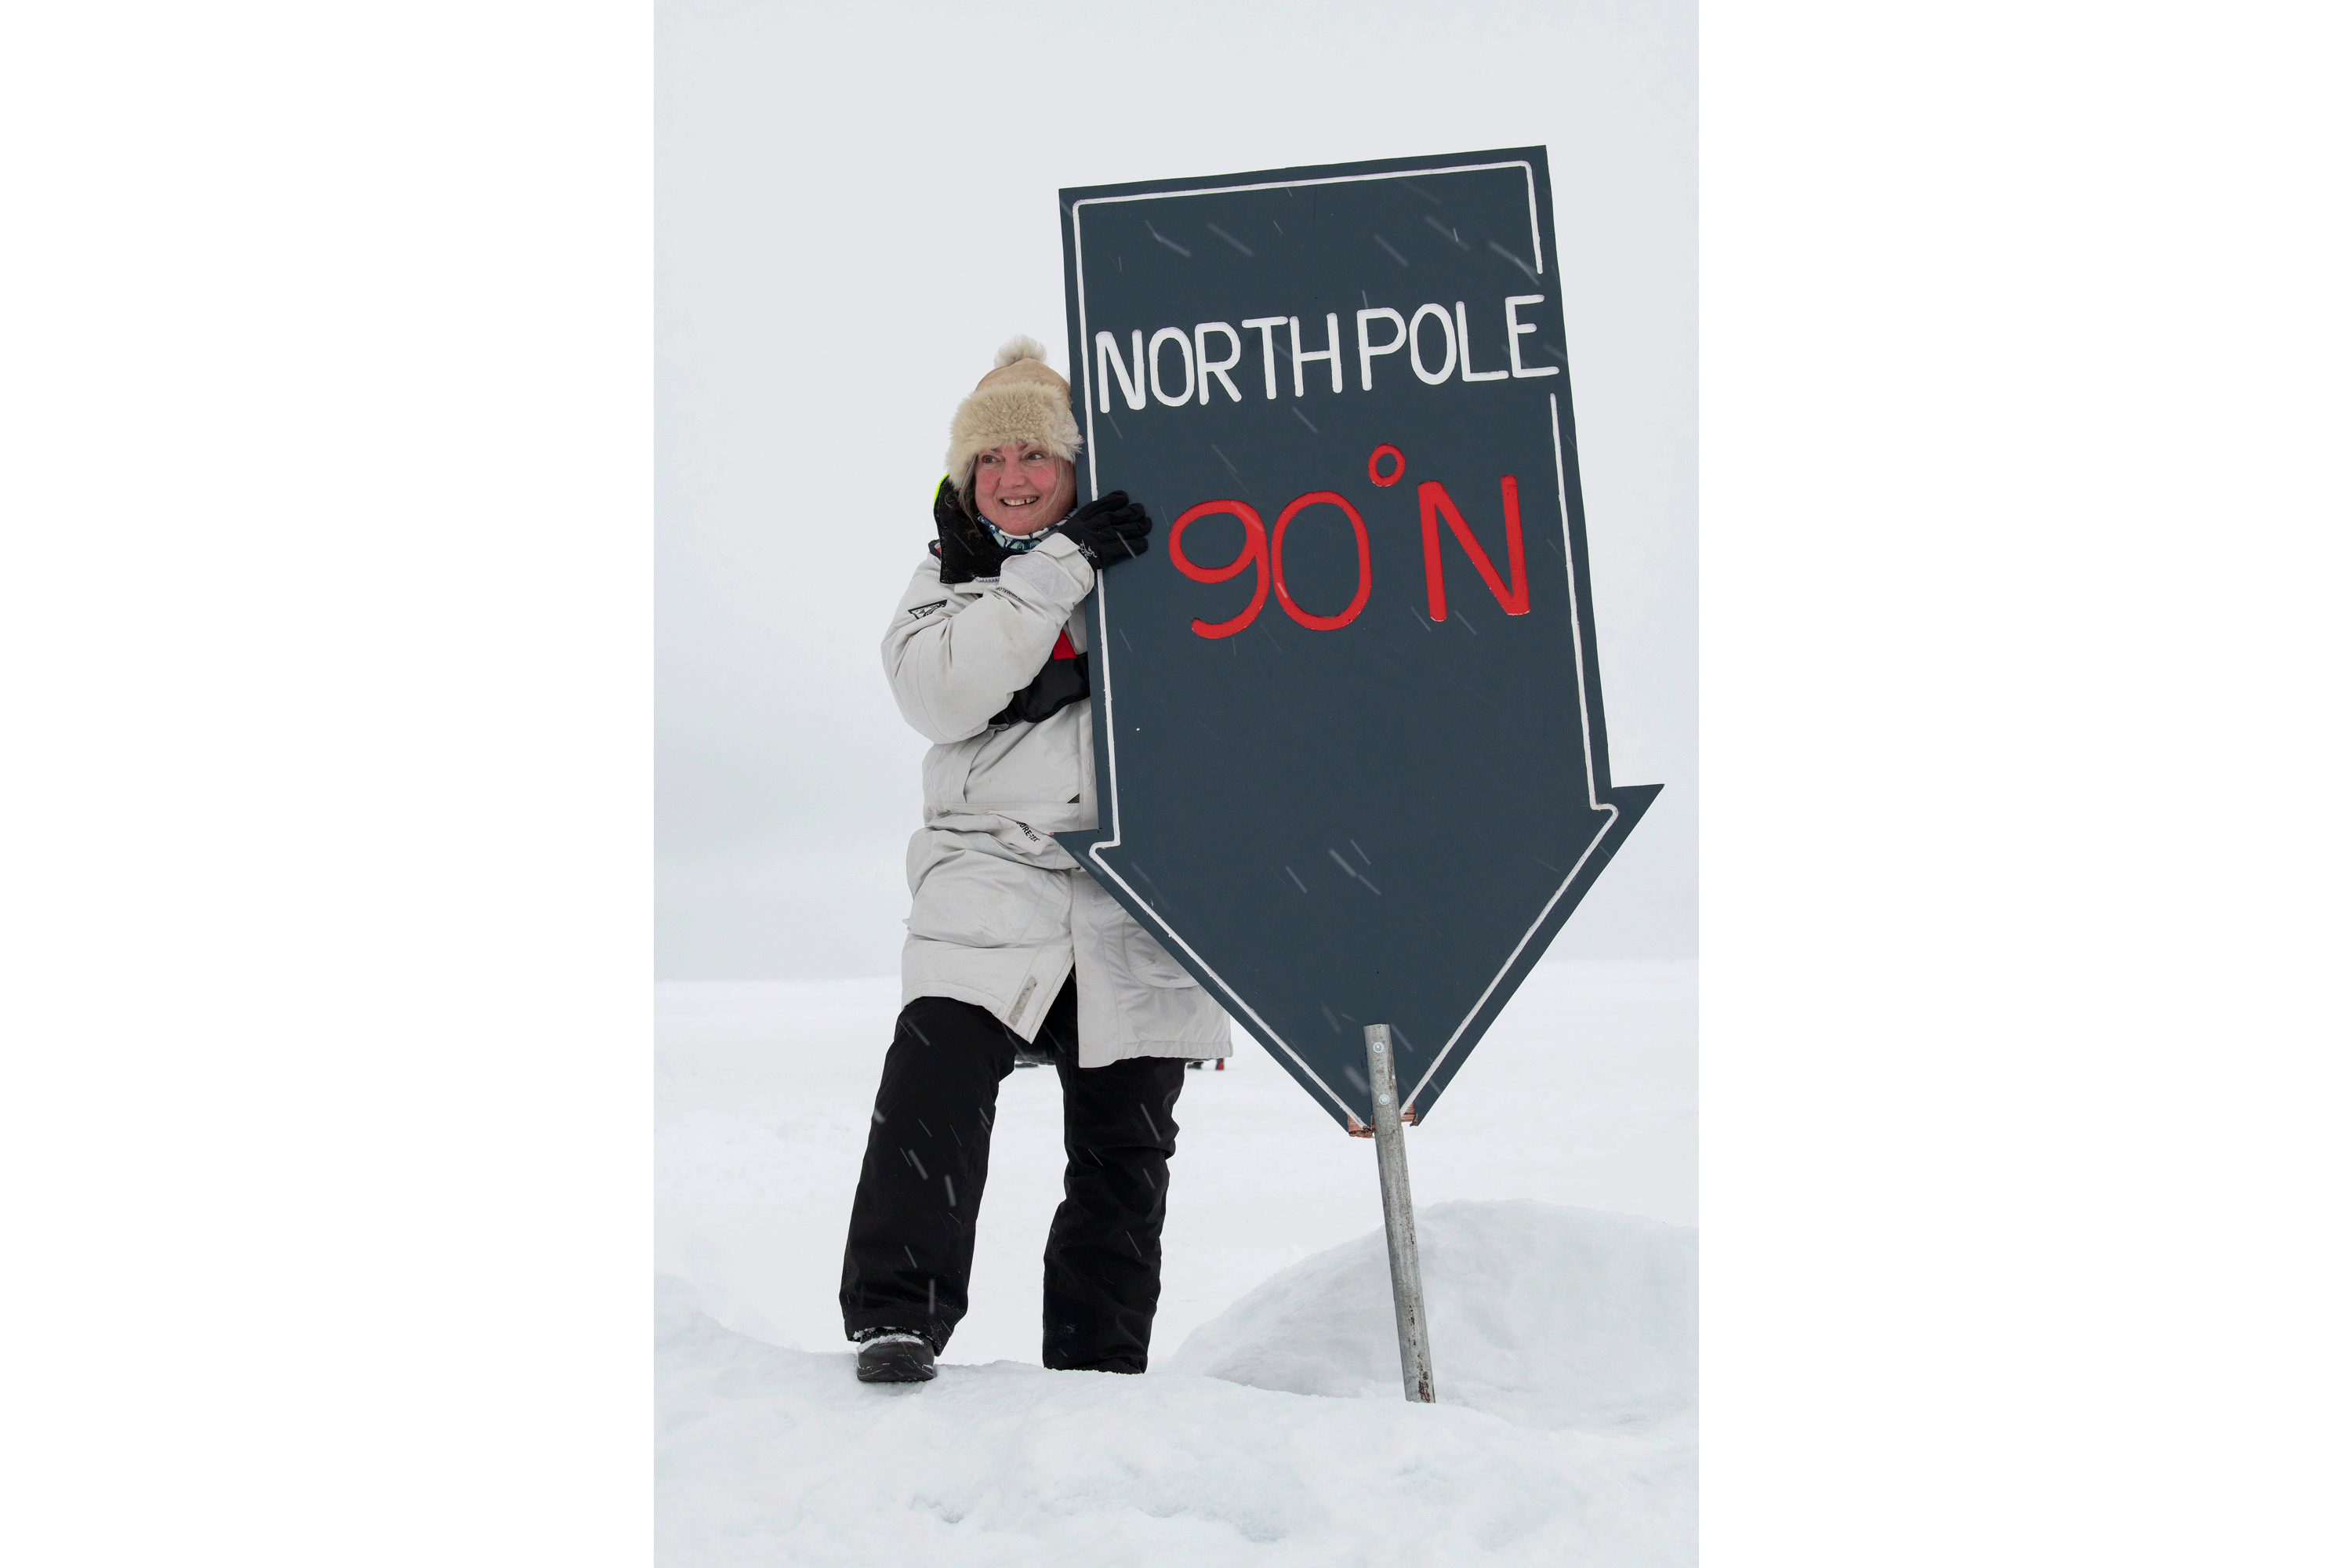 Sue at the North Pole